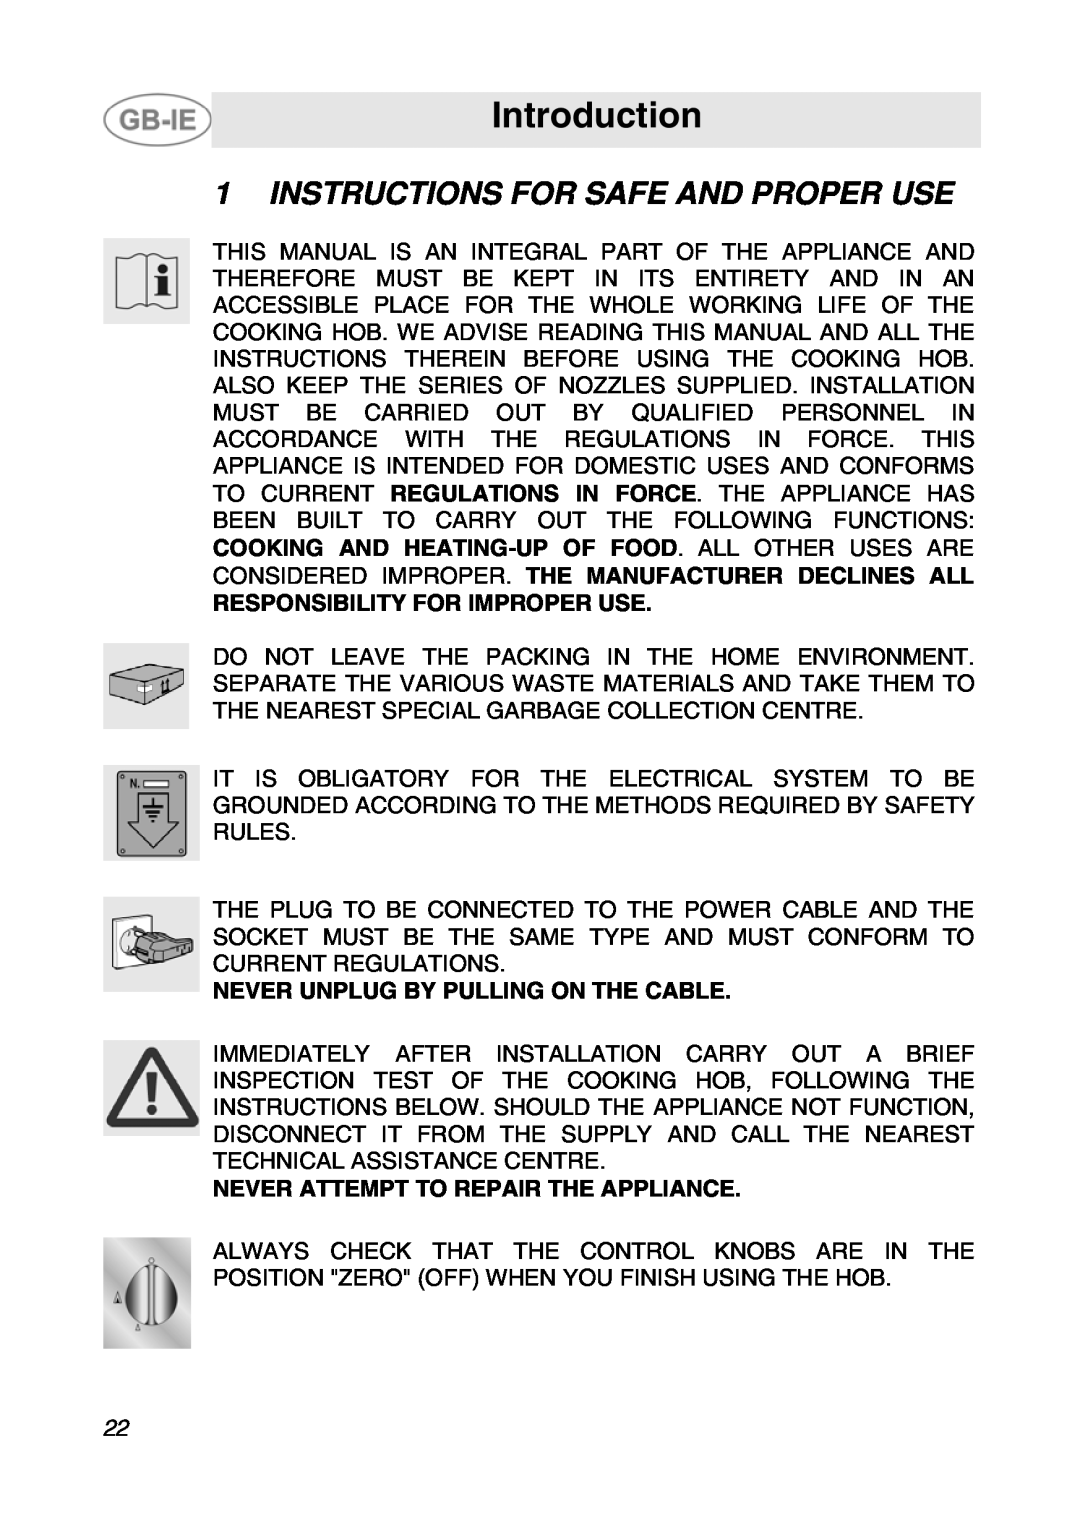 Smeg GCS70XG manual Introduction, Instructions For Safe And Proper Use, Responsibility For Improper Use 